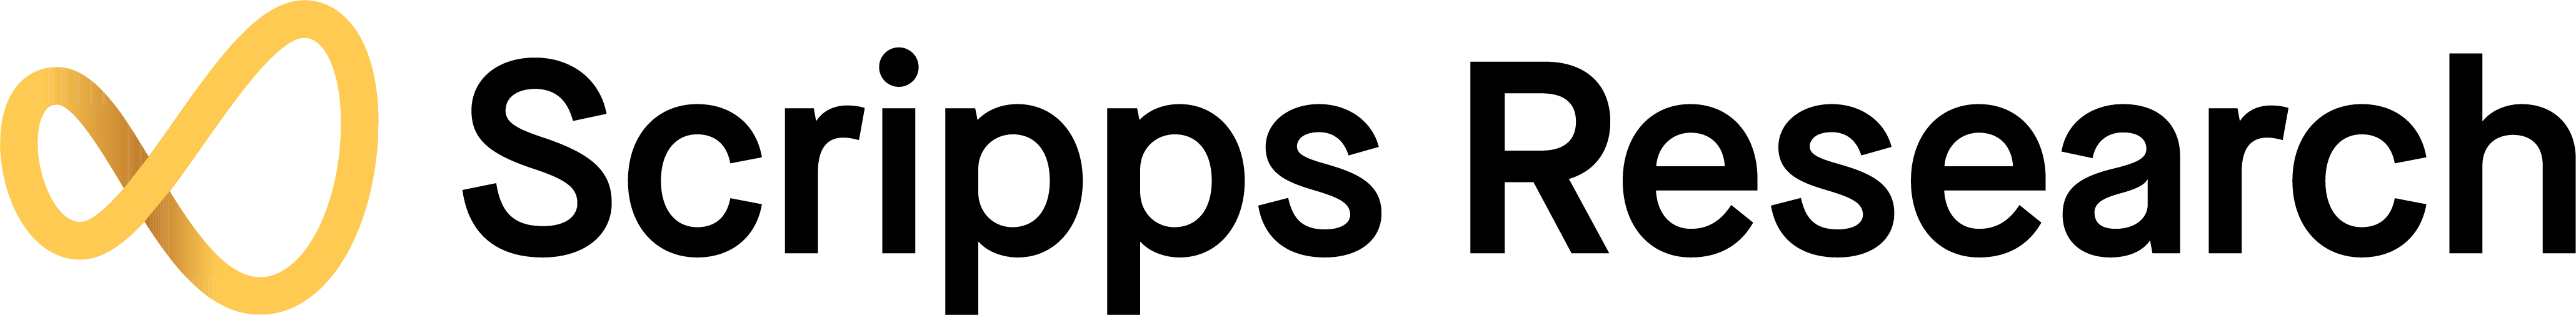 Scripps Logo - Scripps Research